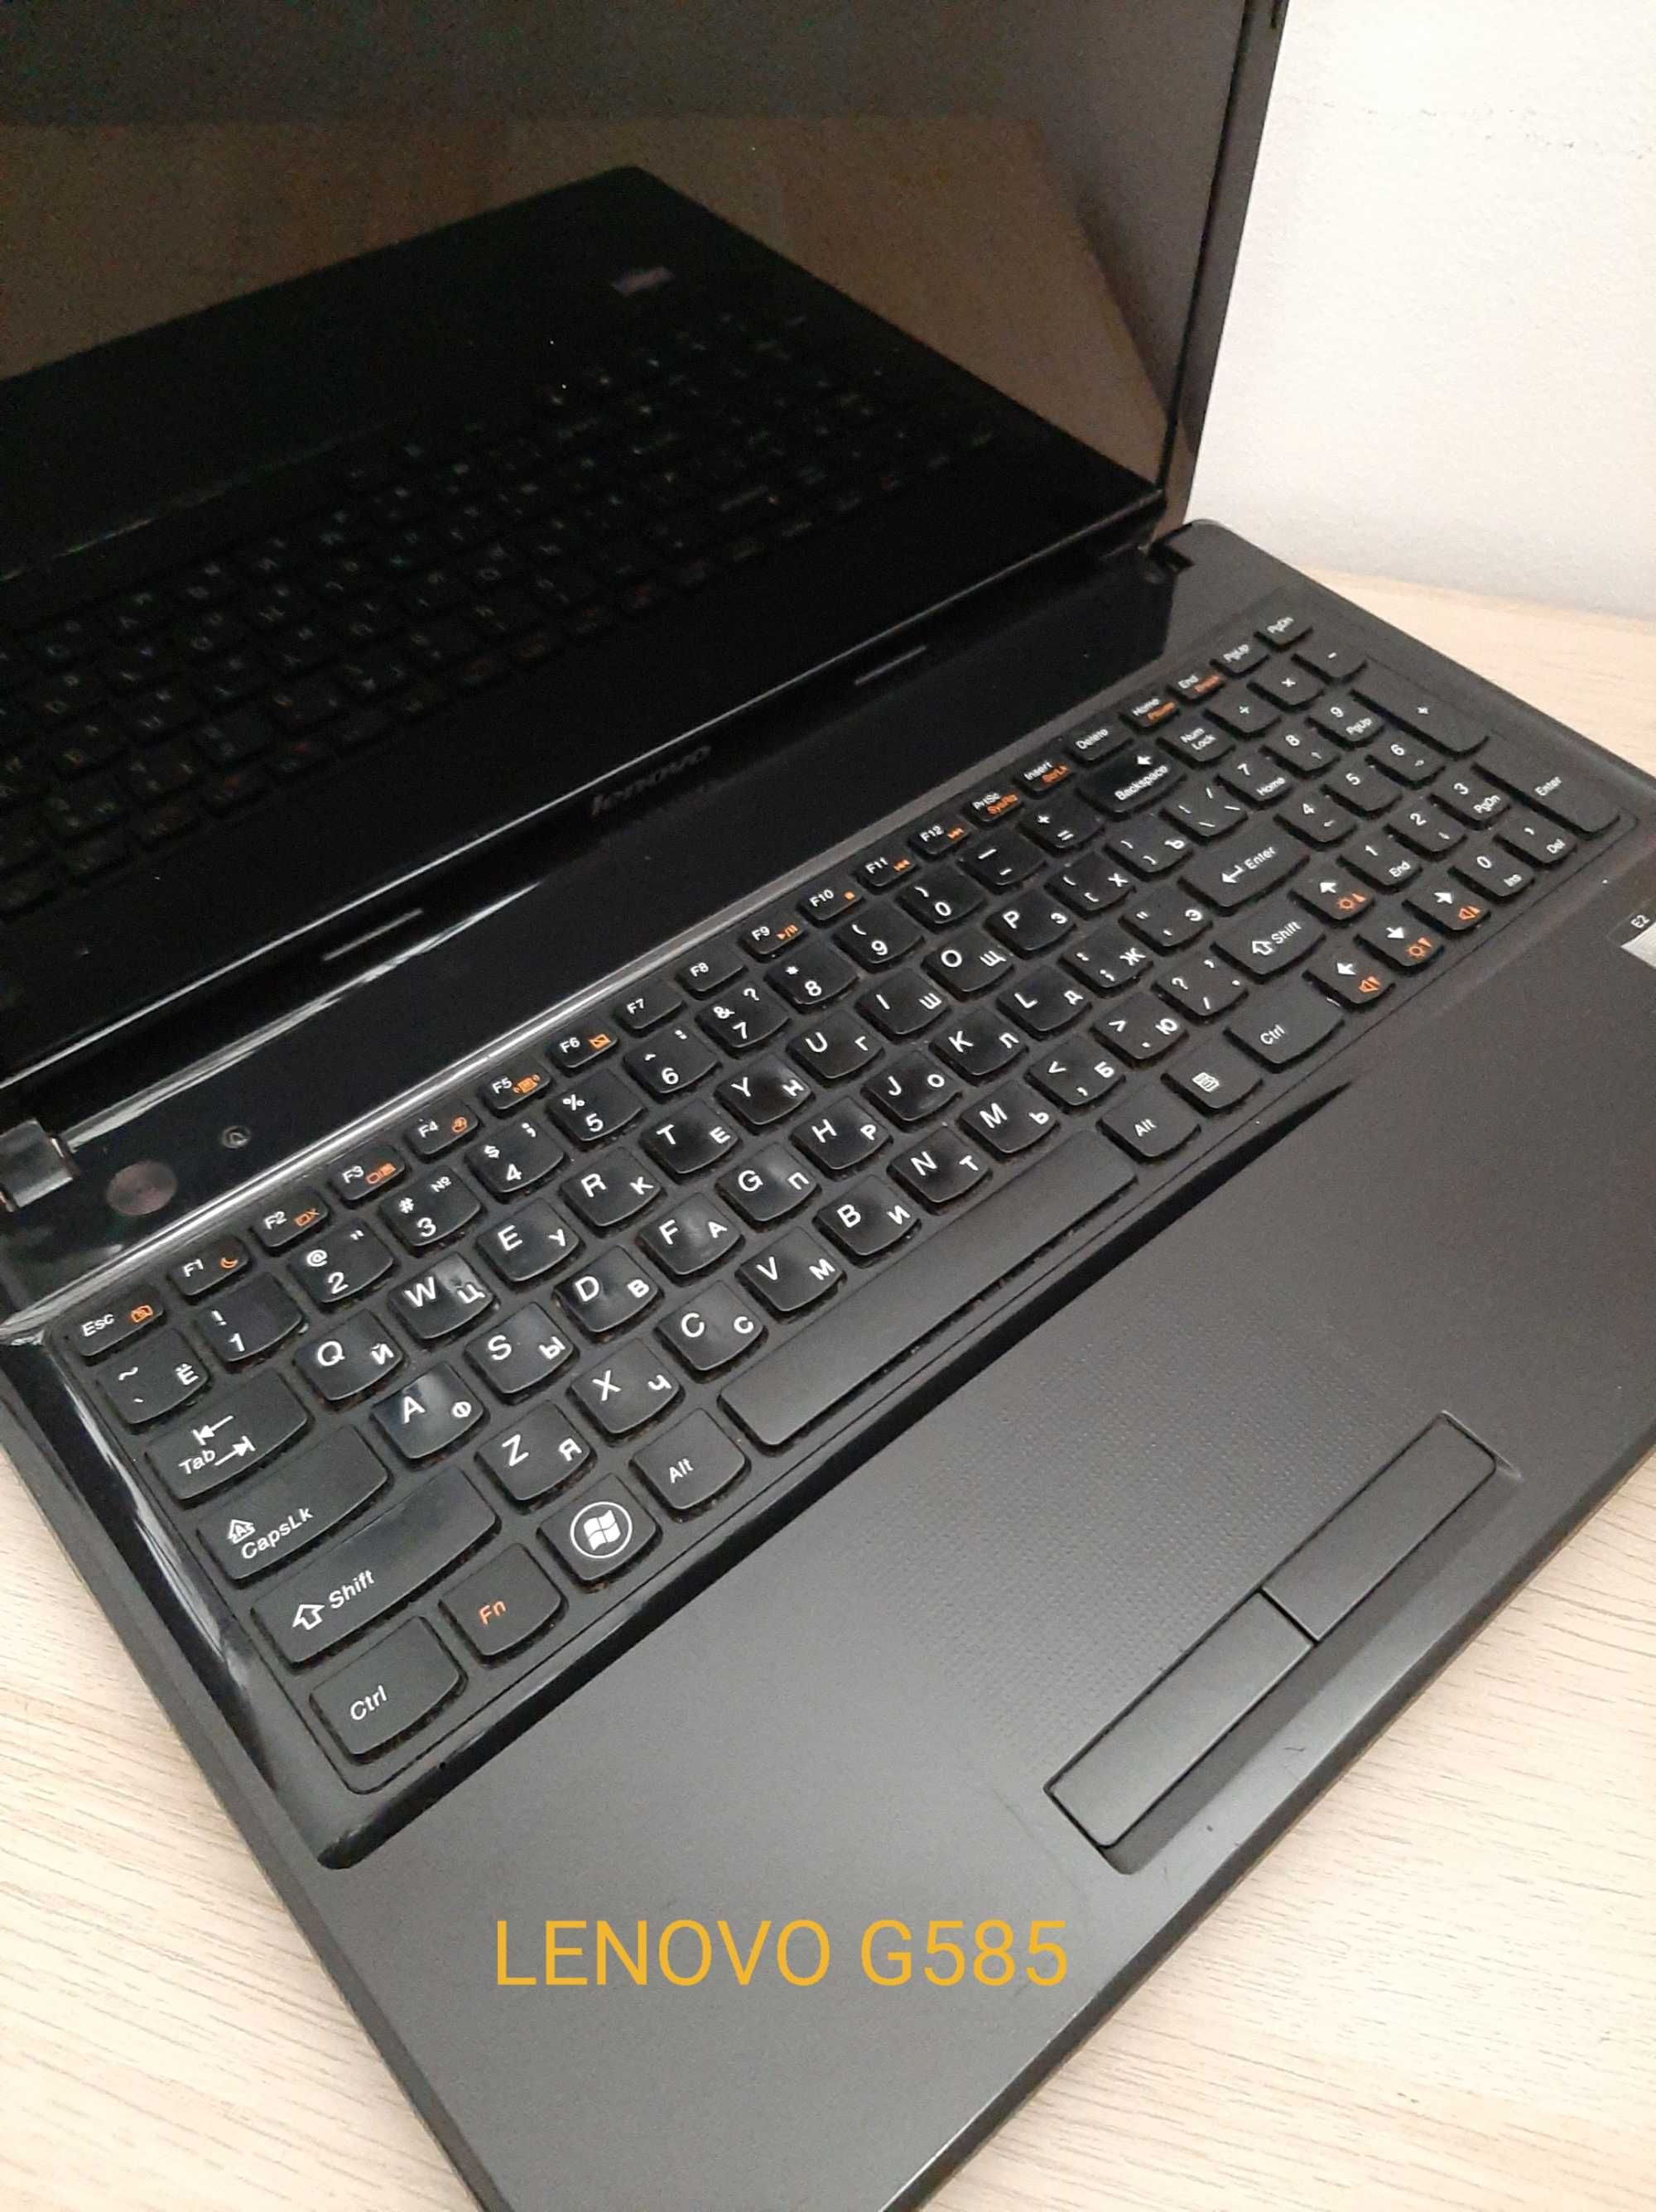 Laptop enovo G585